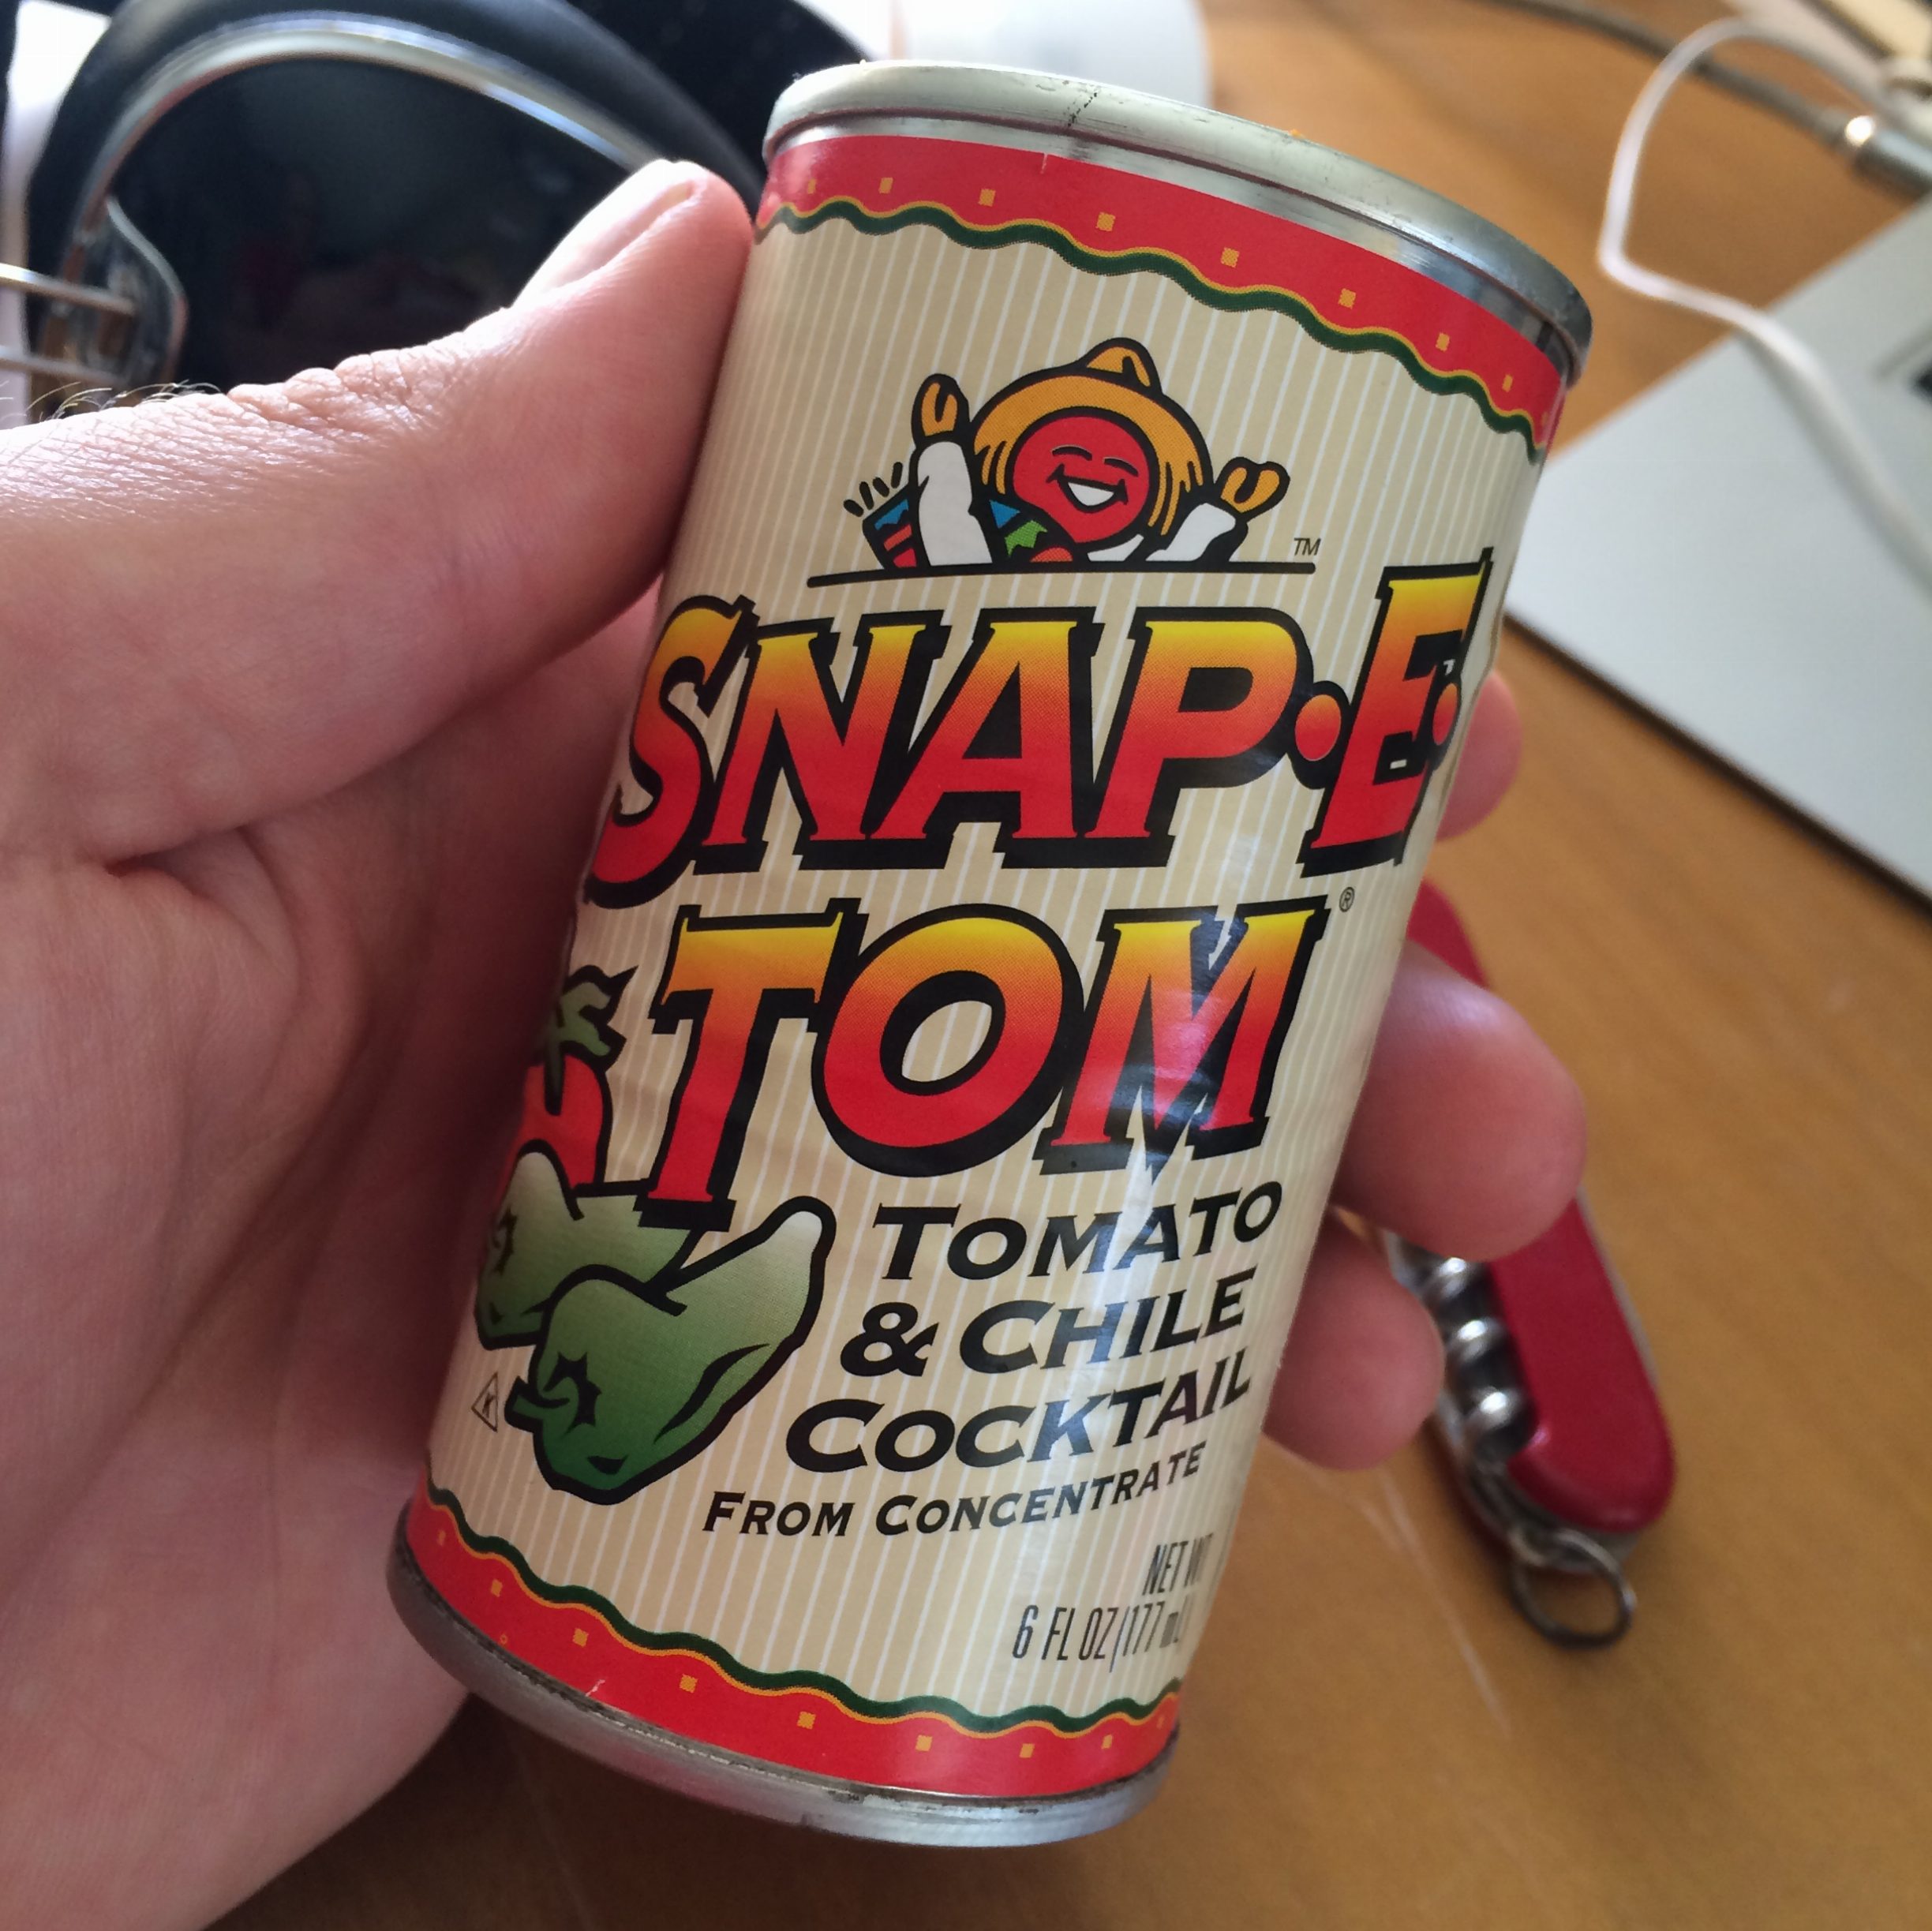 Snap-E-Tom Tomato & Chile Cocktail